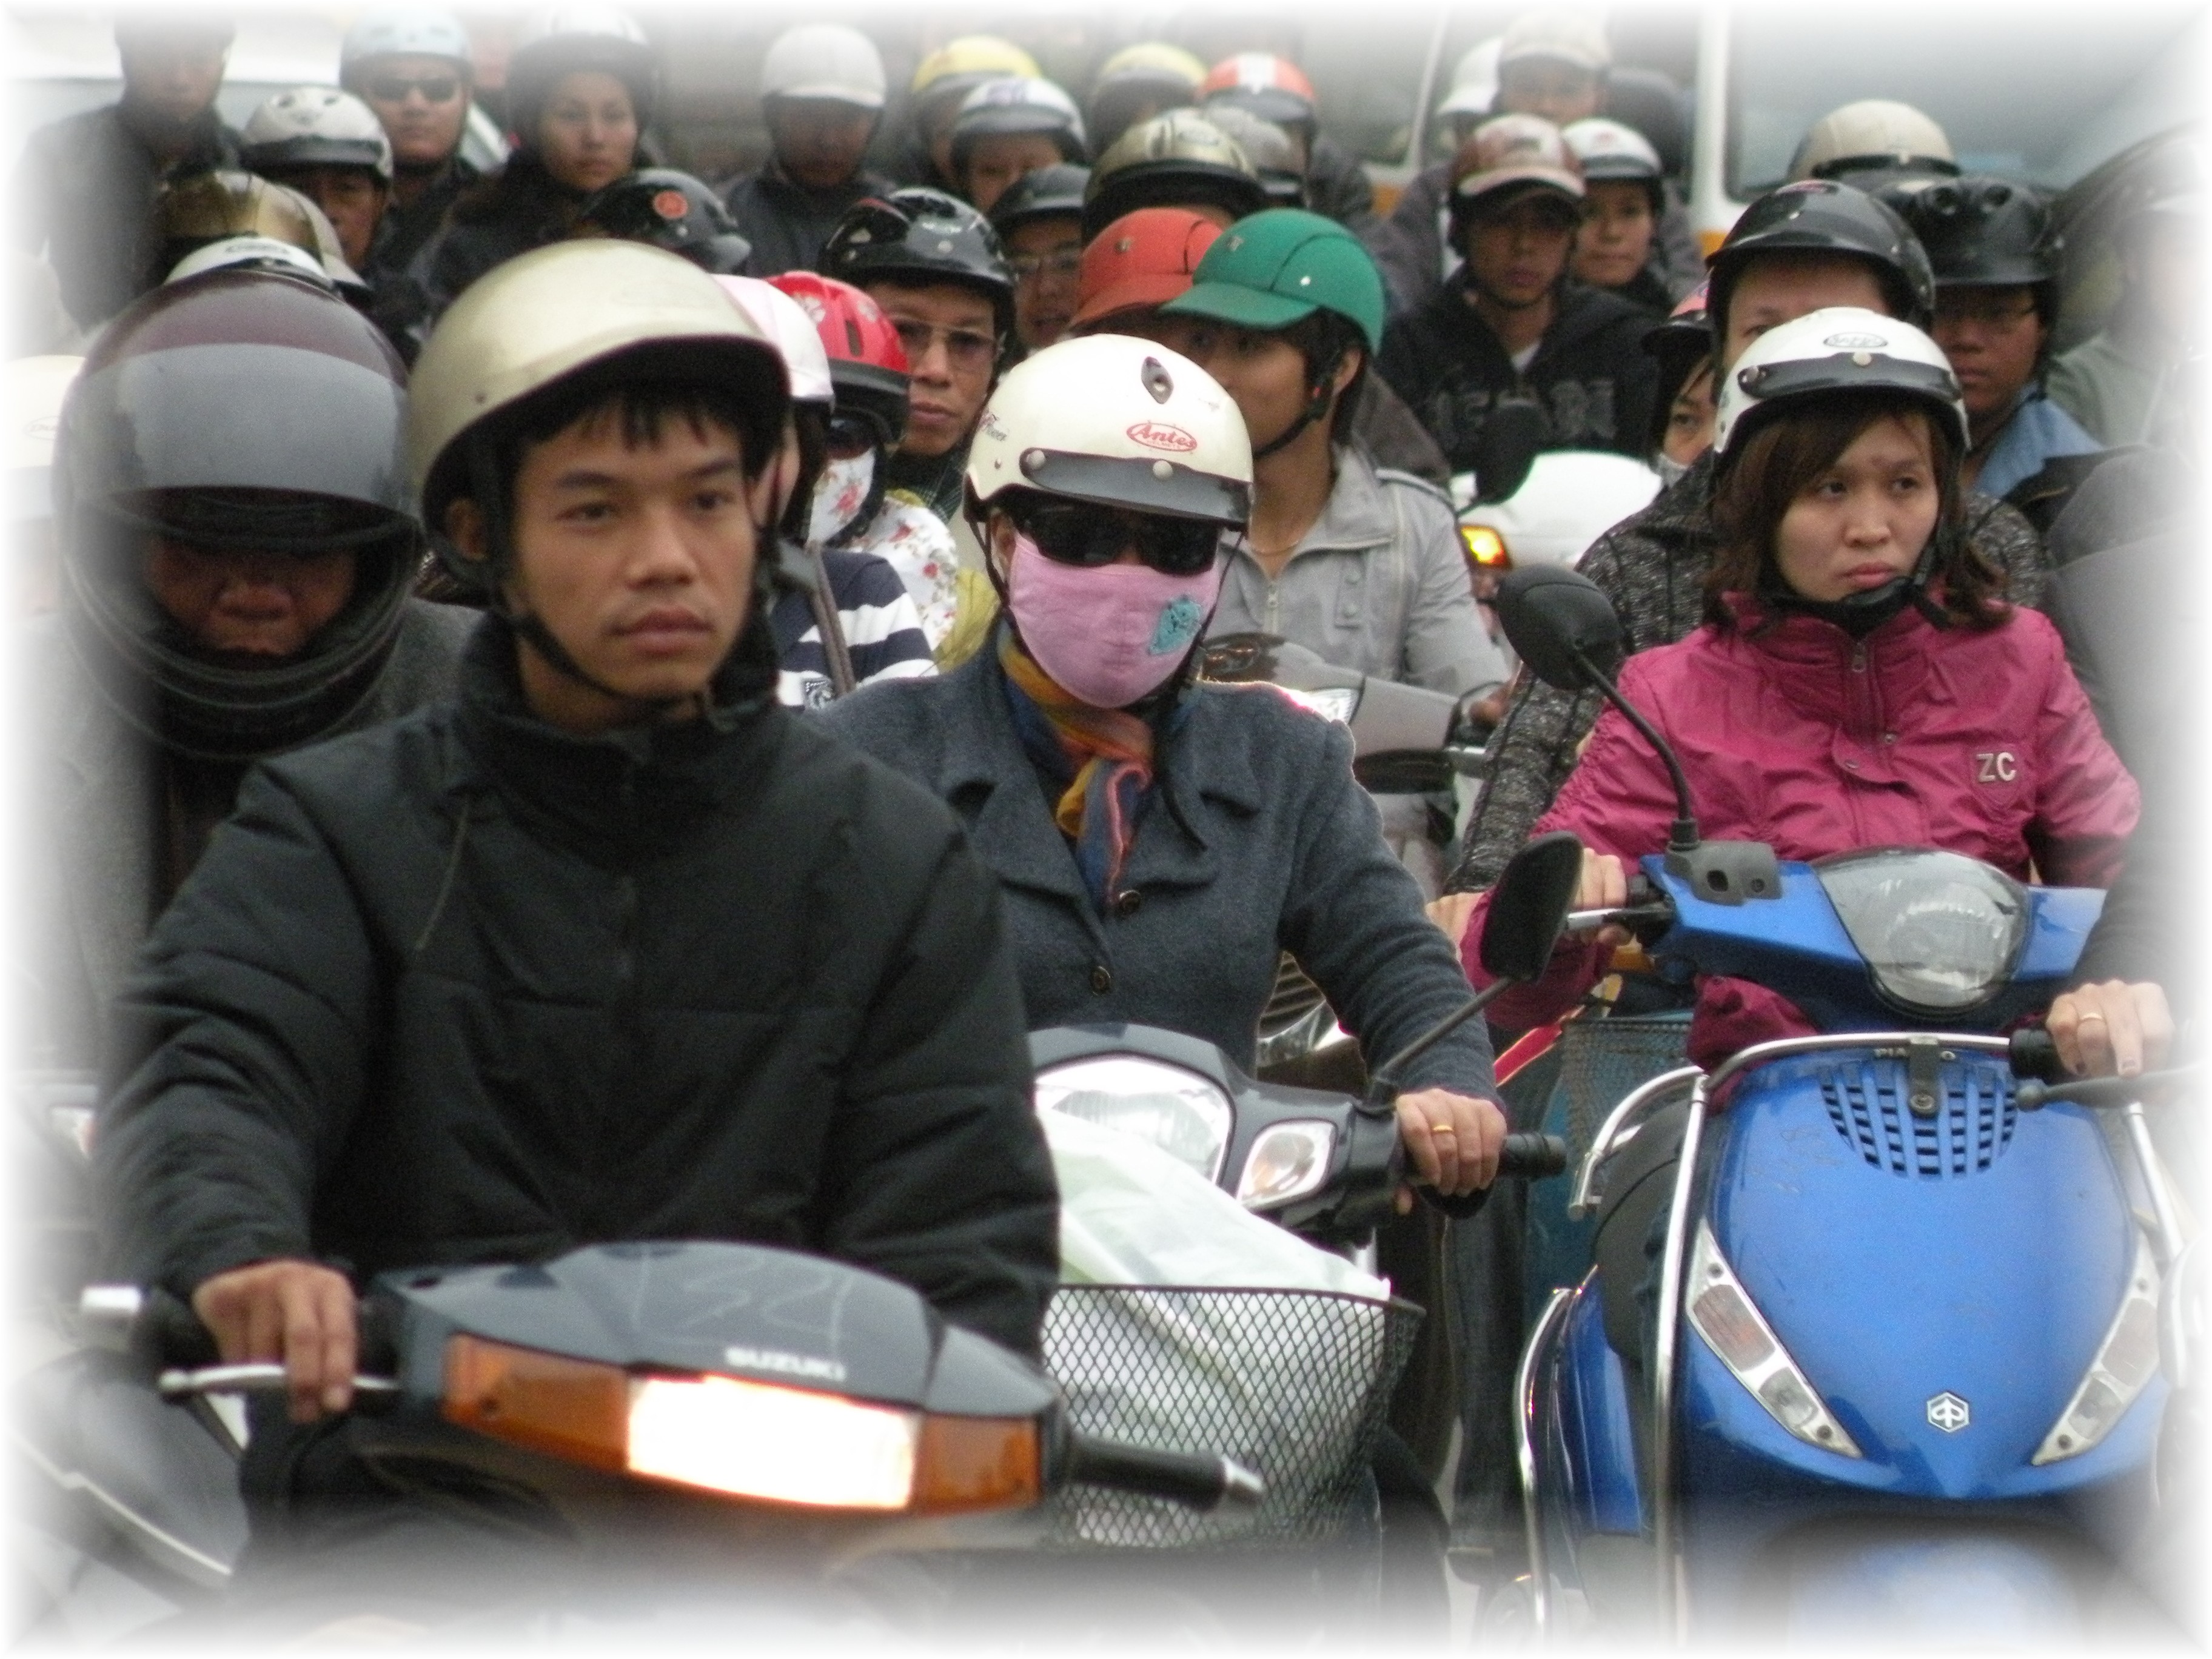 hanoi motor scooters are primarily 2 stroke engines inefficient